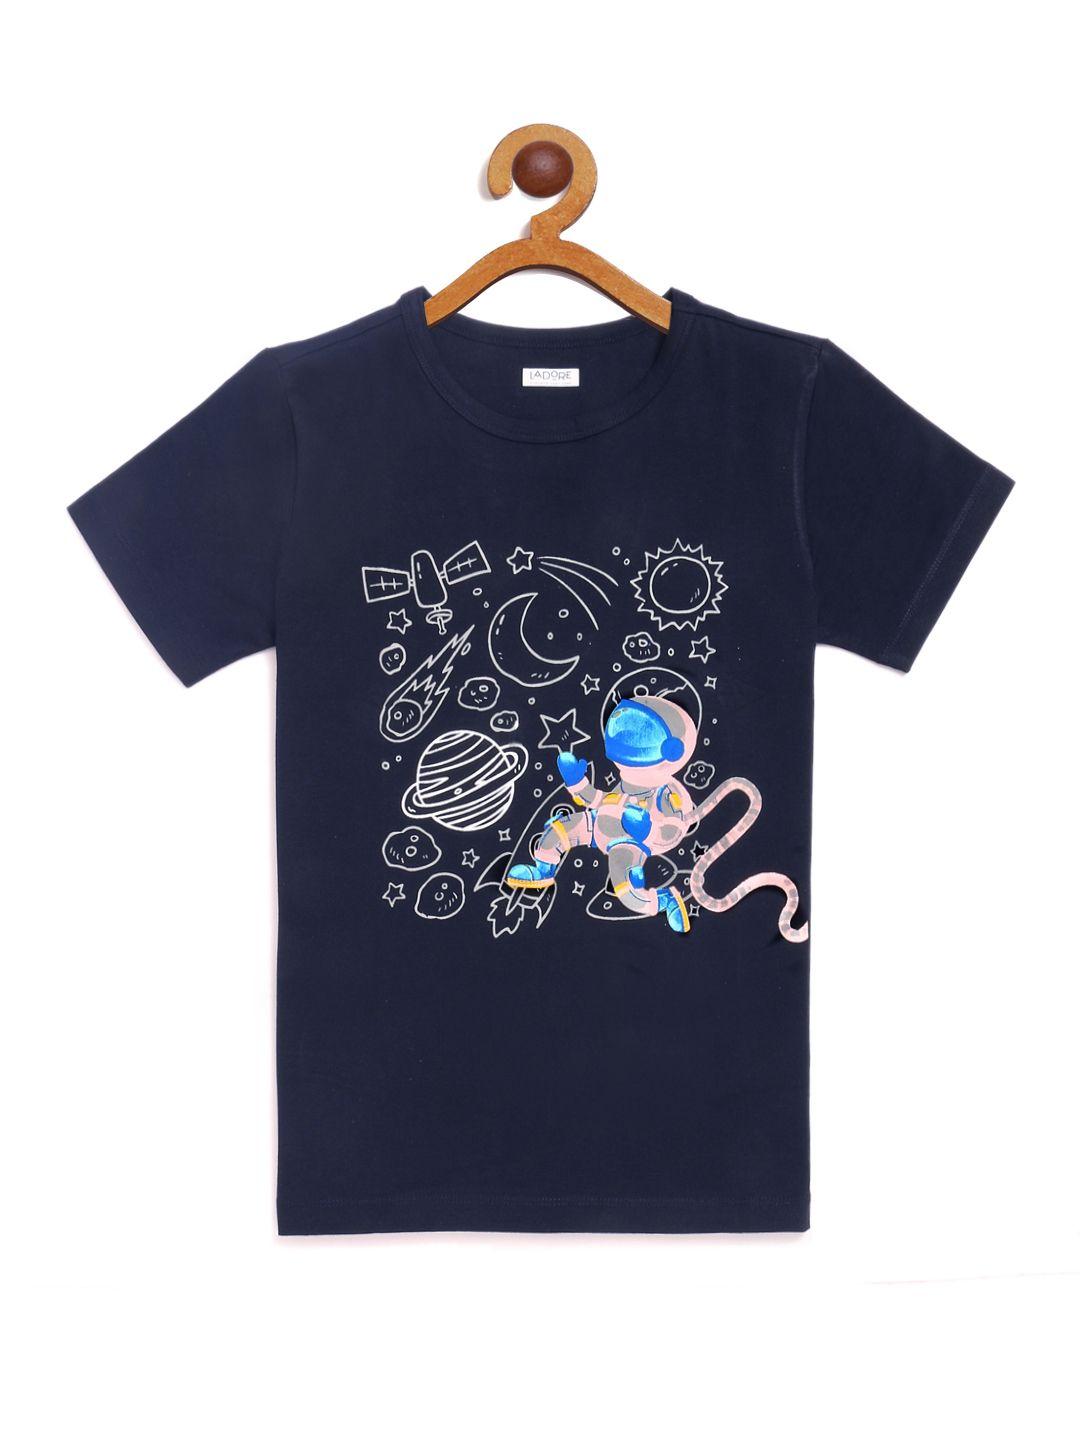 ladore unisex kids navy blue printed round neck t-shirt